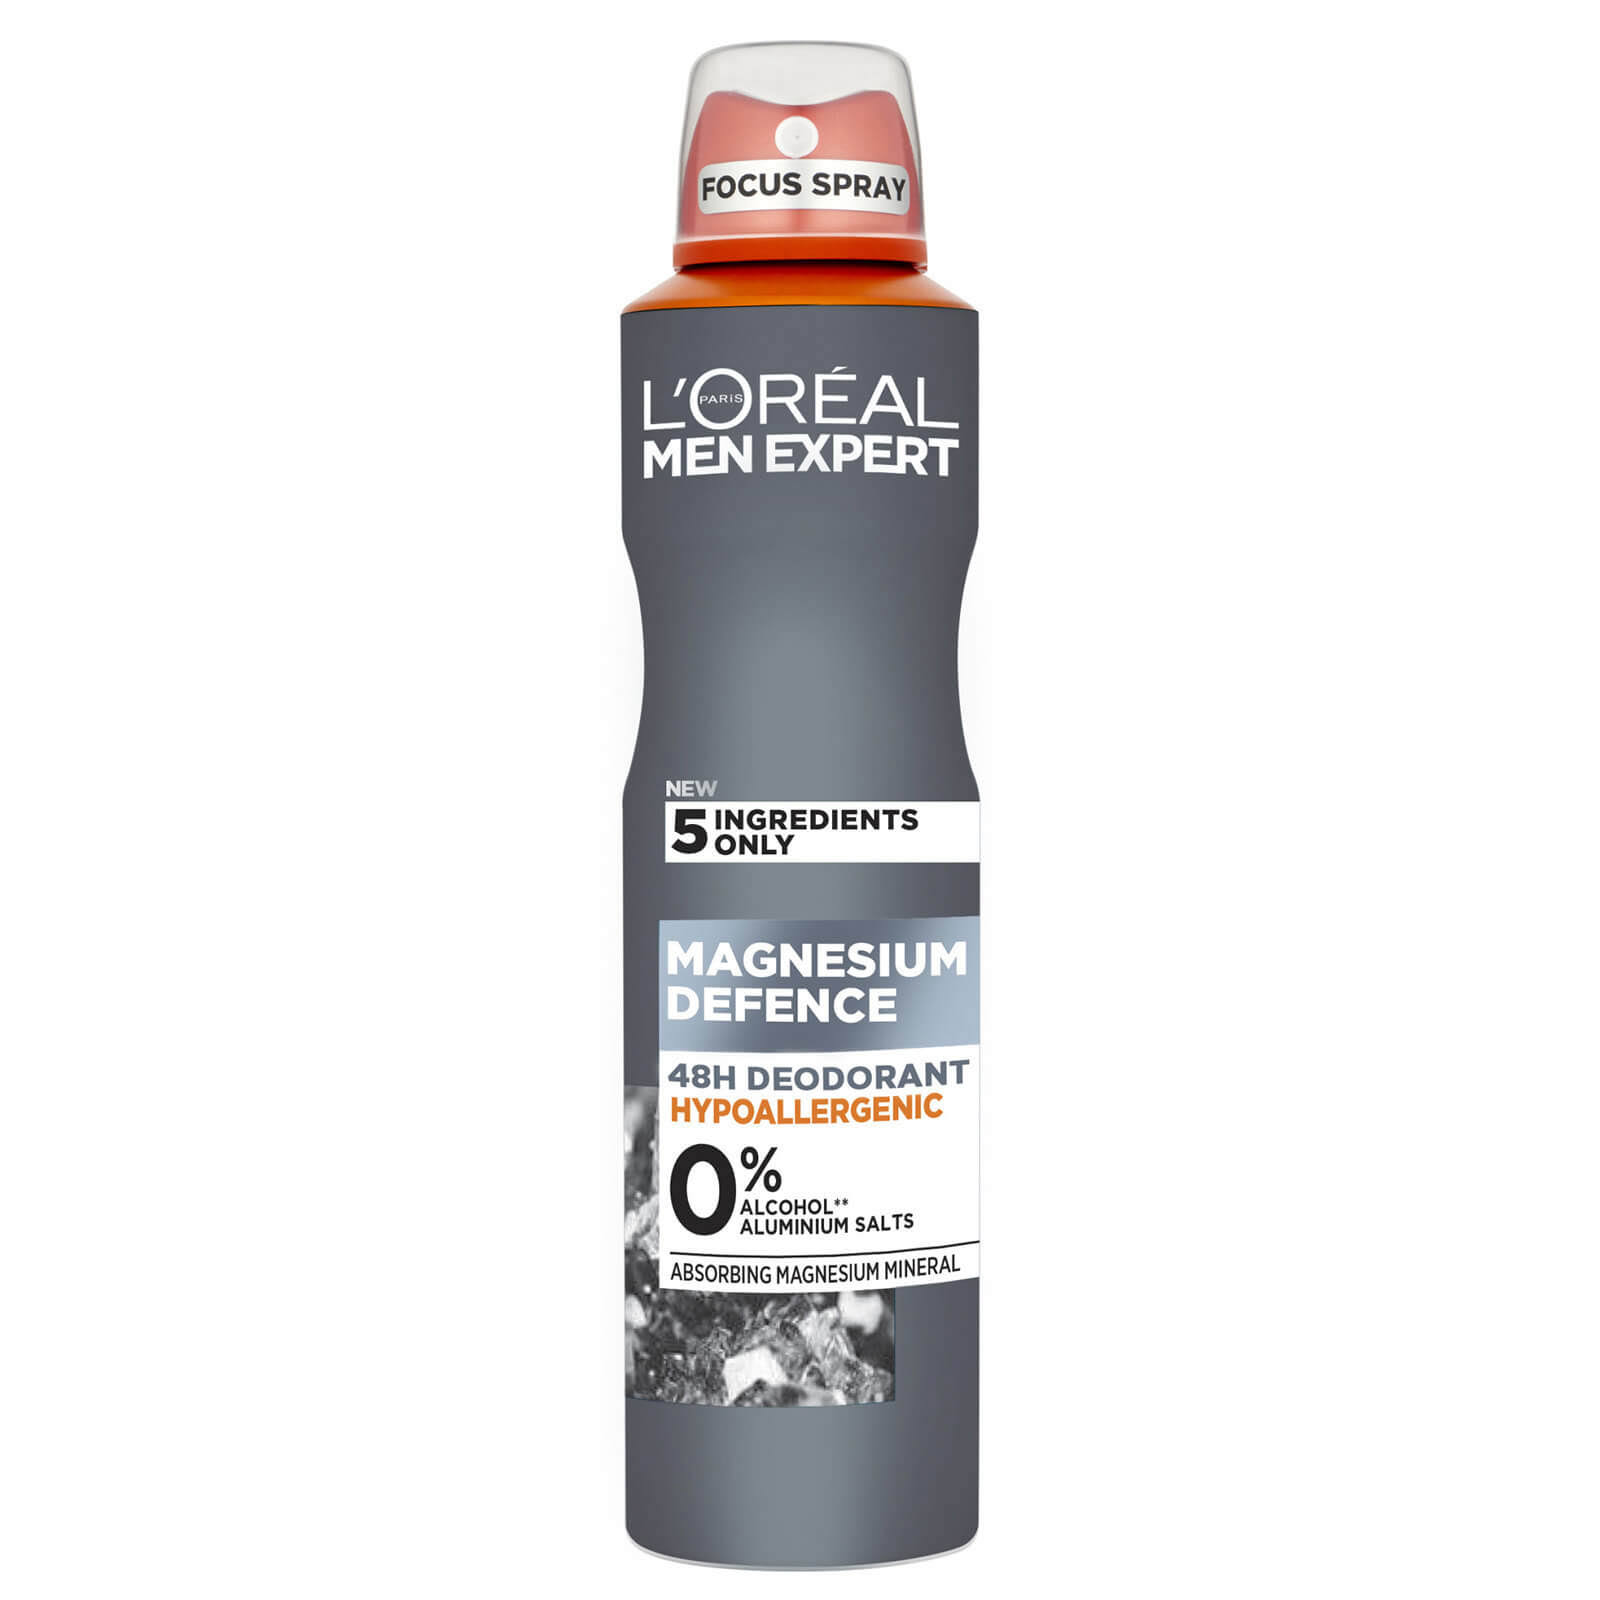 L'Oreal Men Expert Hypoallergenic Deodorant Magnesium Defence Hypoallergenic 48 Hour Protection Mens Deodorant 250ml